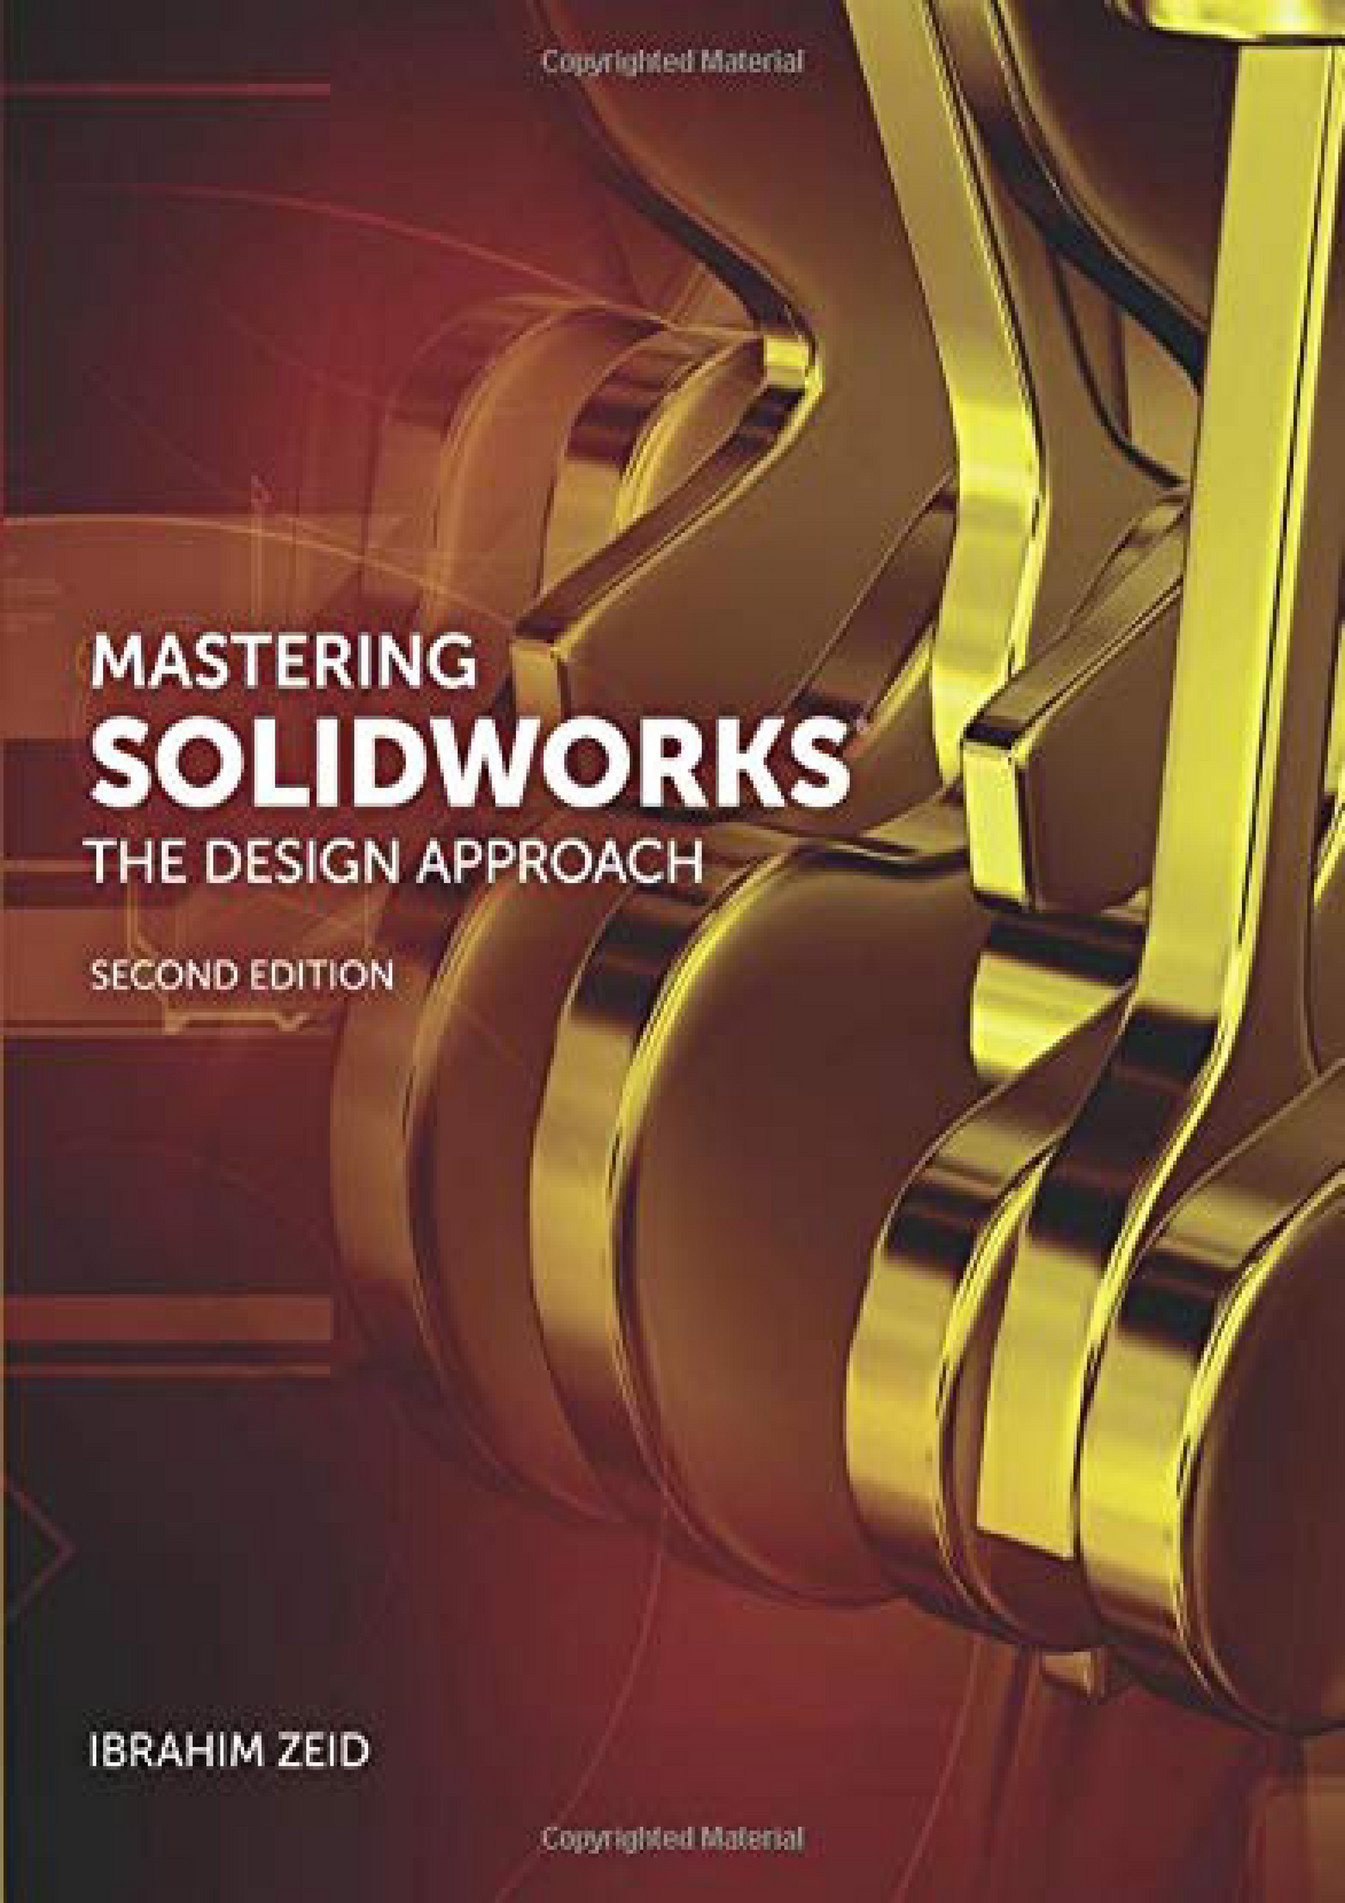 solidworks 2013 ebook free download